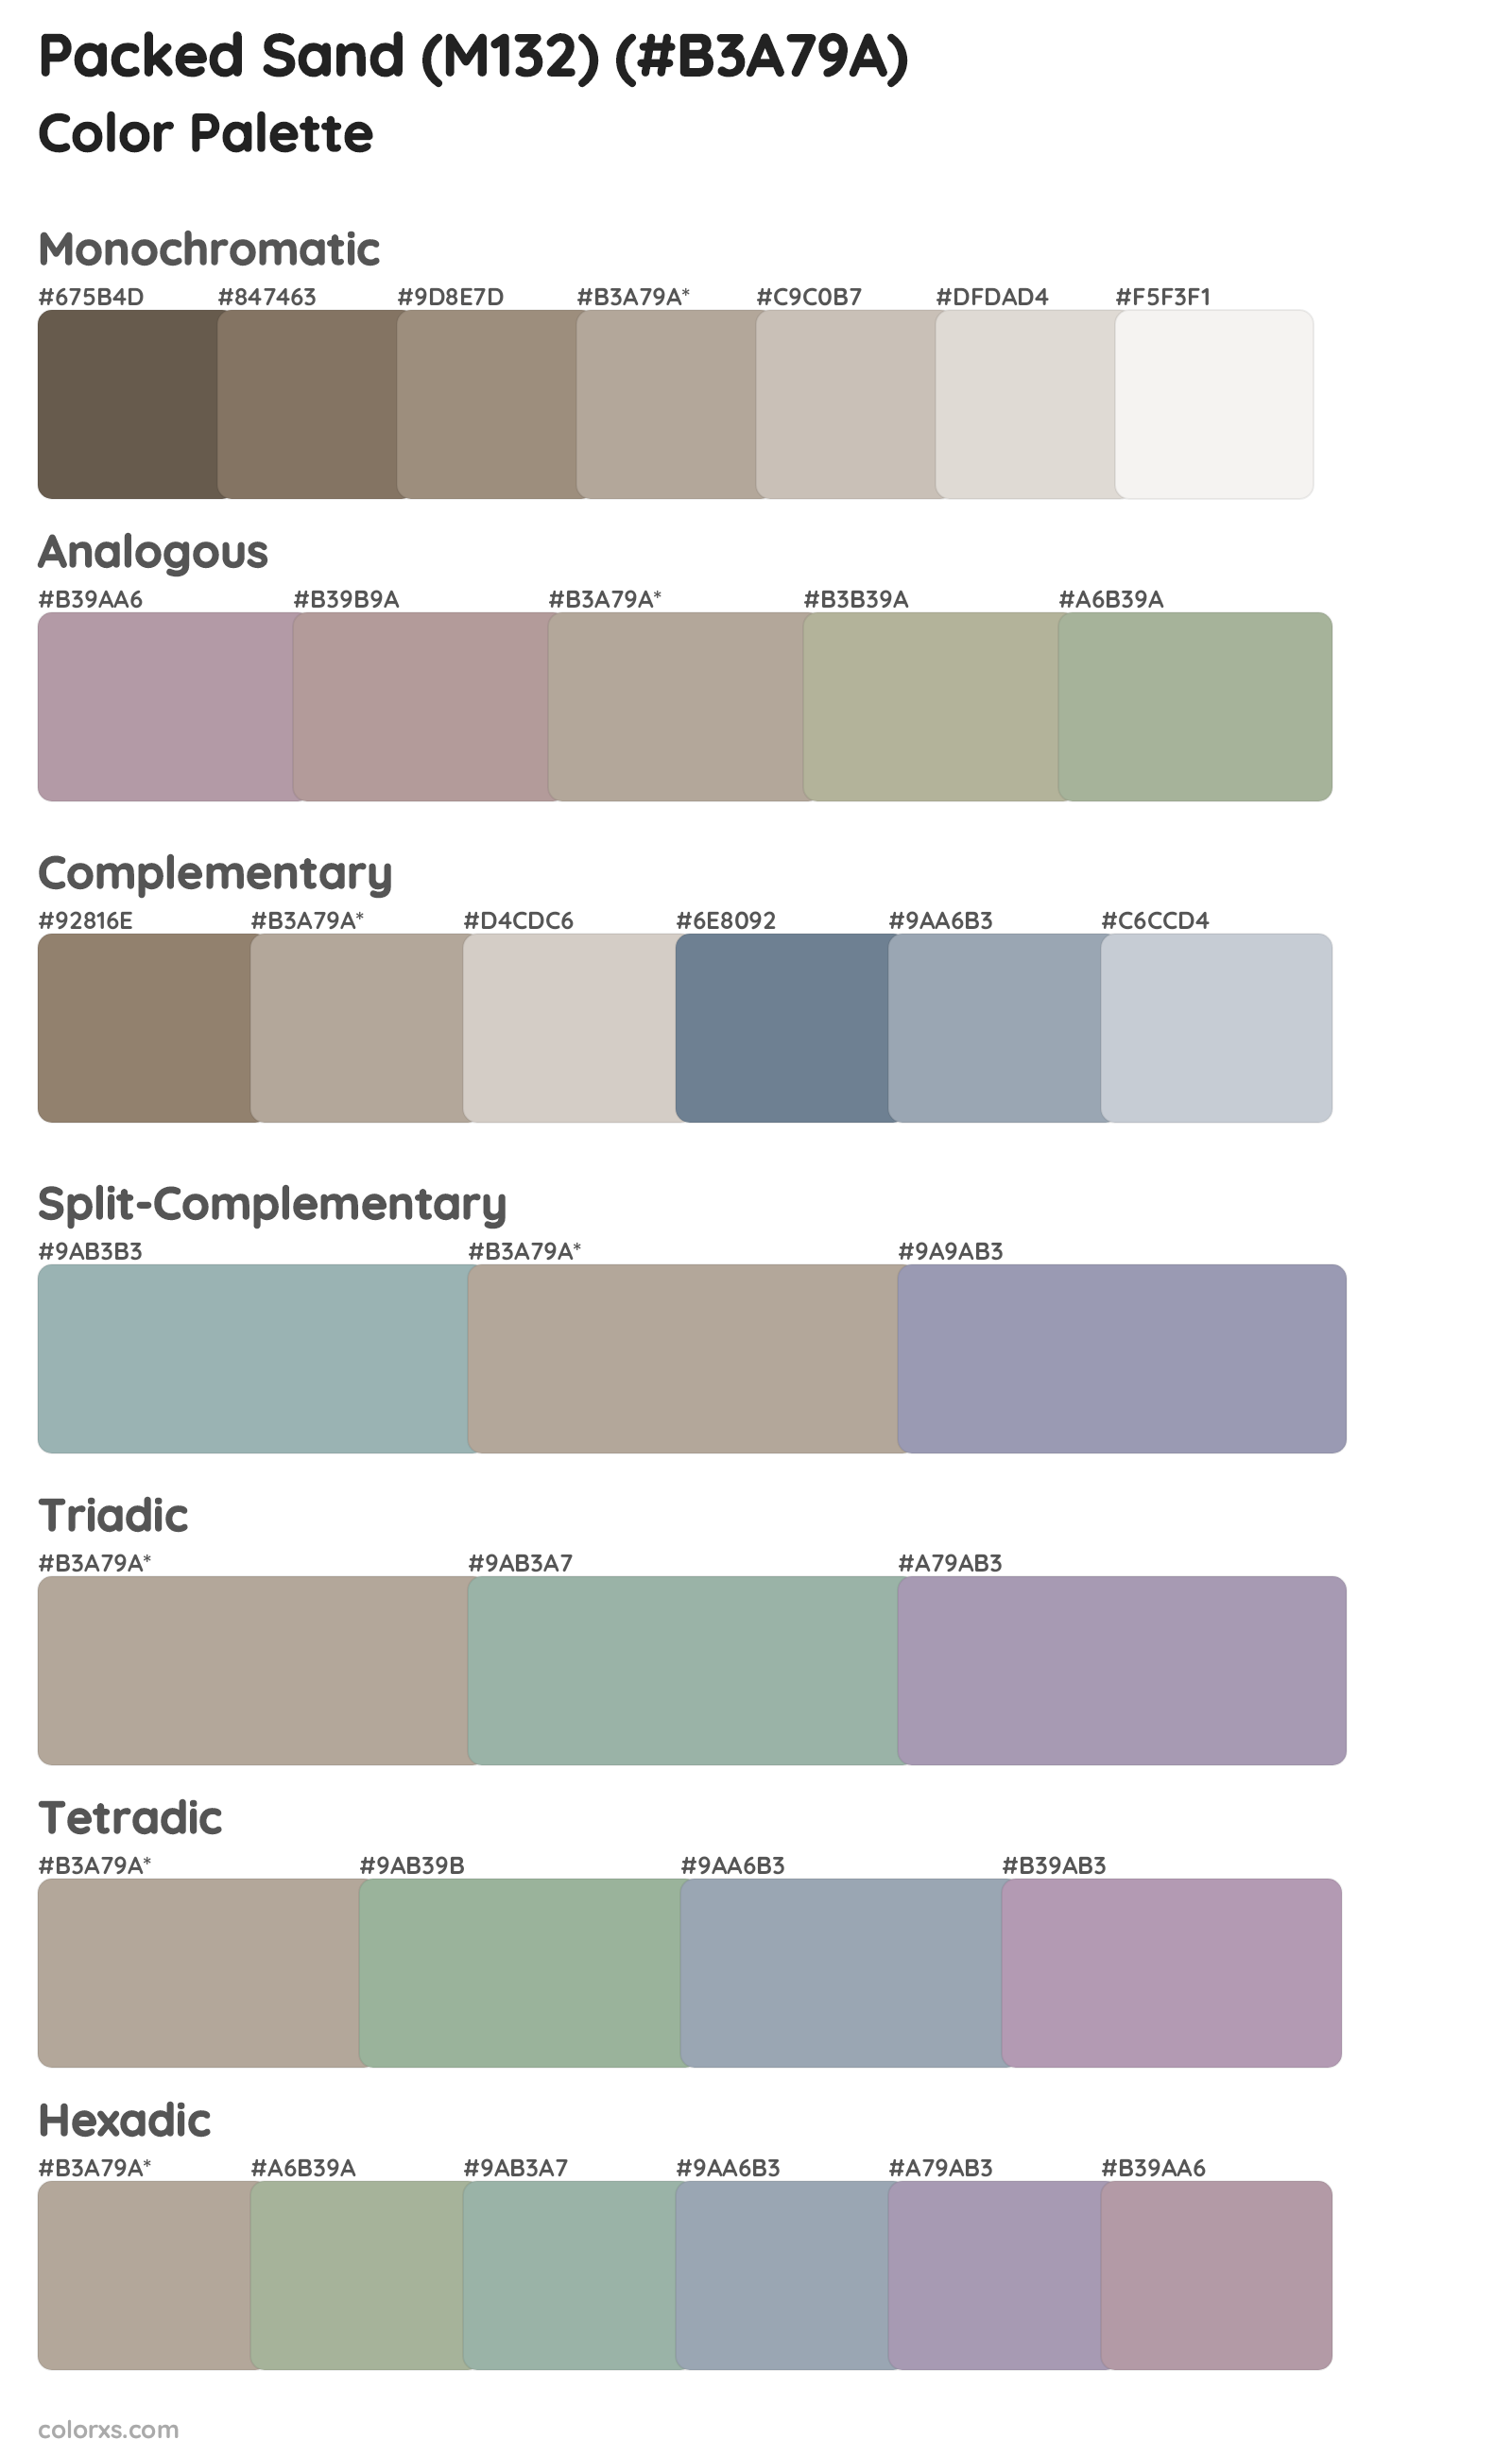 Packed Sand (M132) Color Scheme Palettes